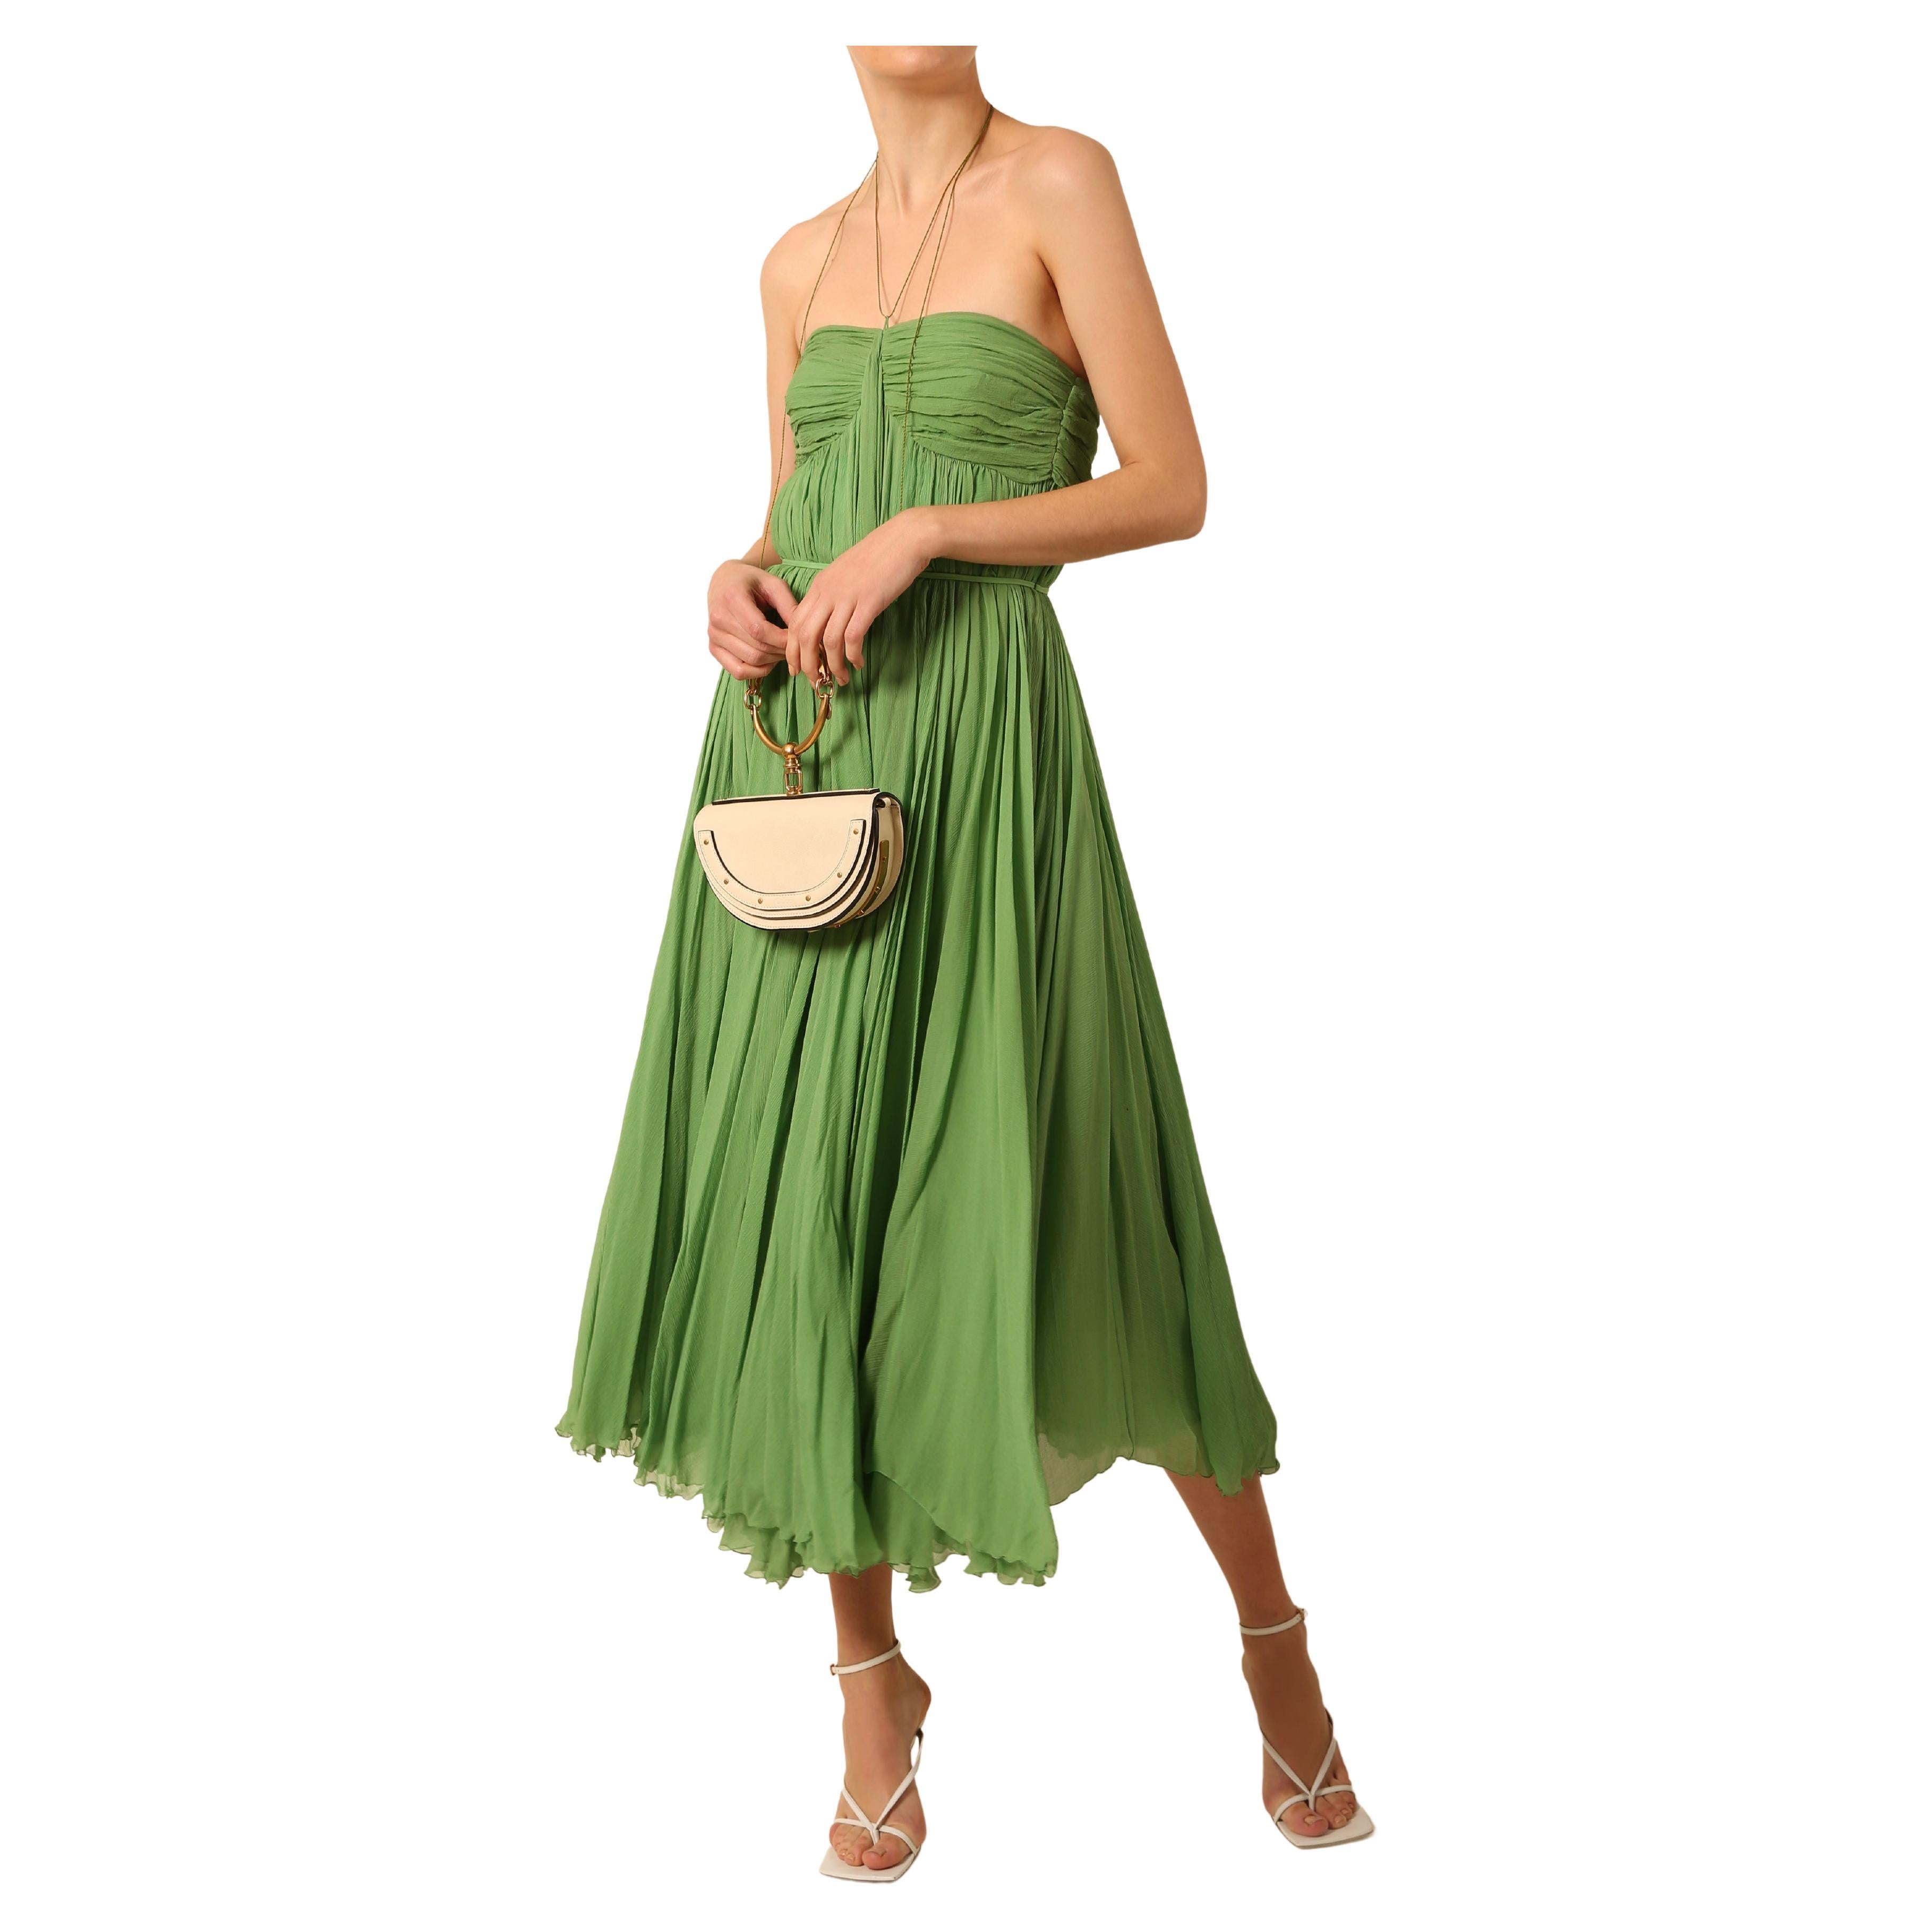 Chloe S04 strapless plisse green silk chiffon layered bustier midi length dress  For Sale